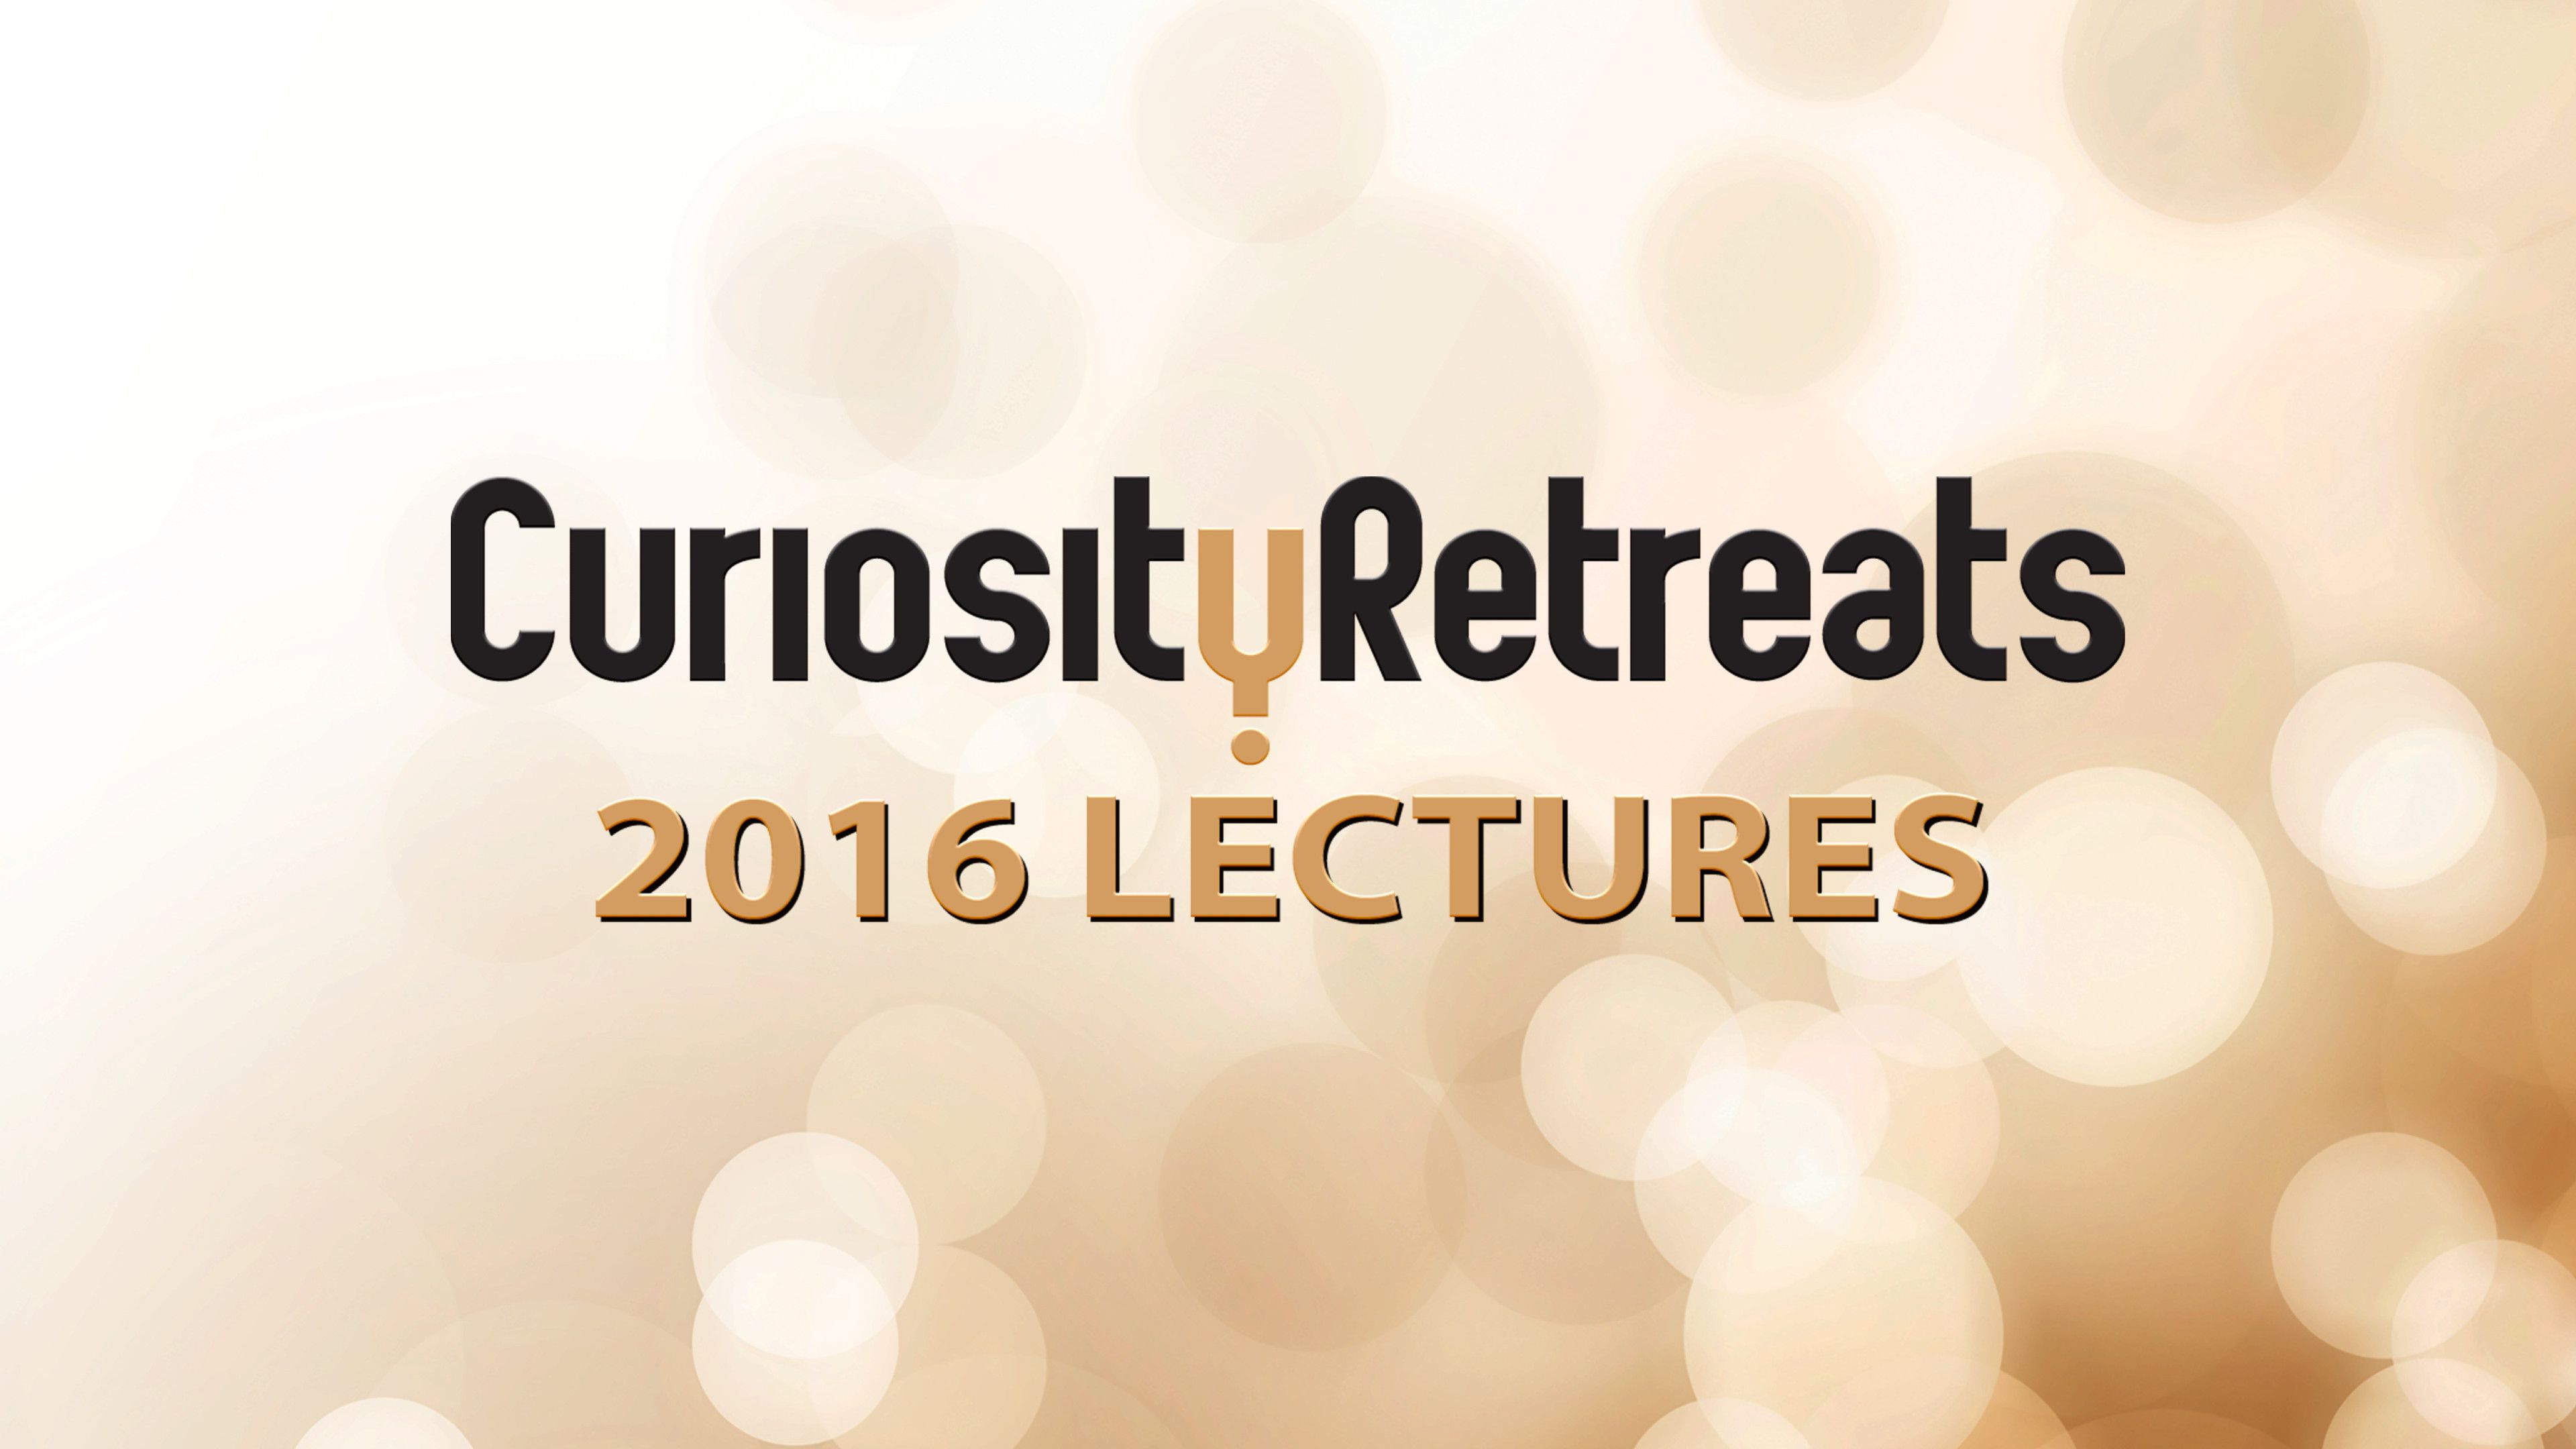 Curiosity Retreats 2016 Lectures